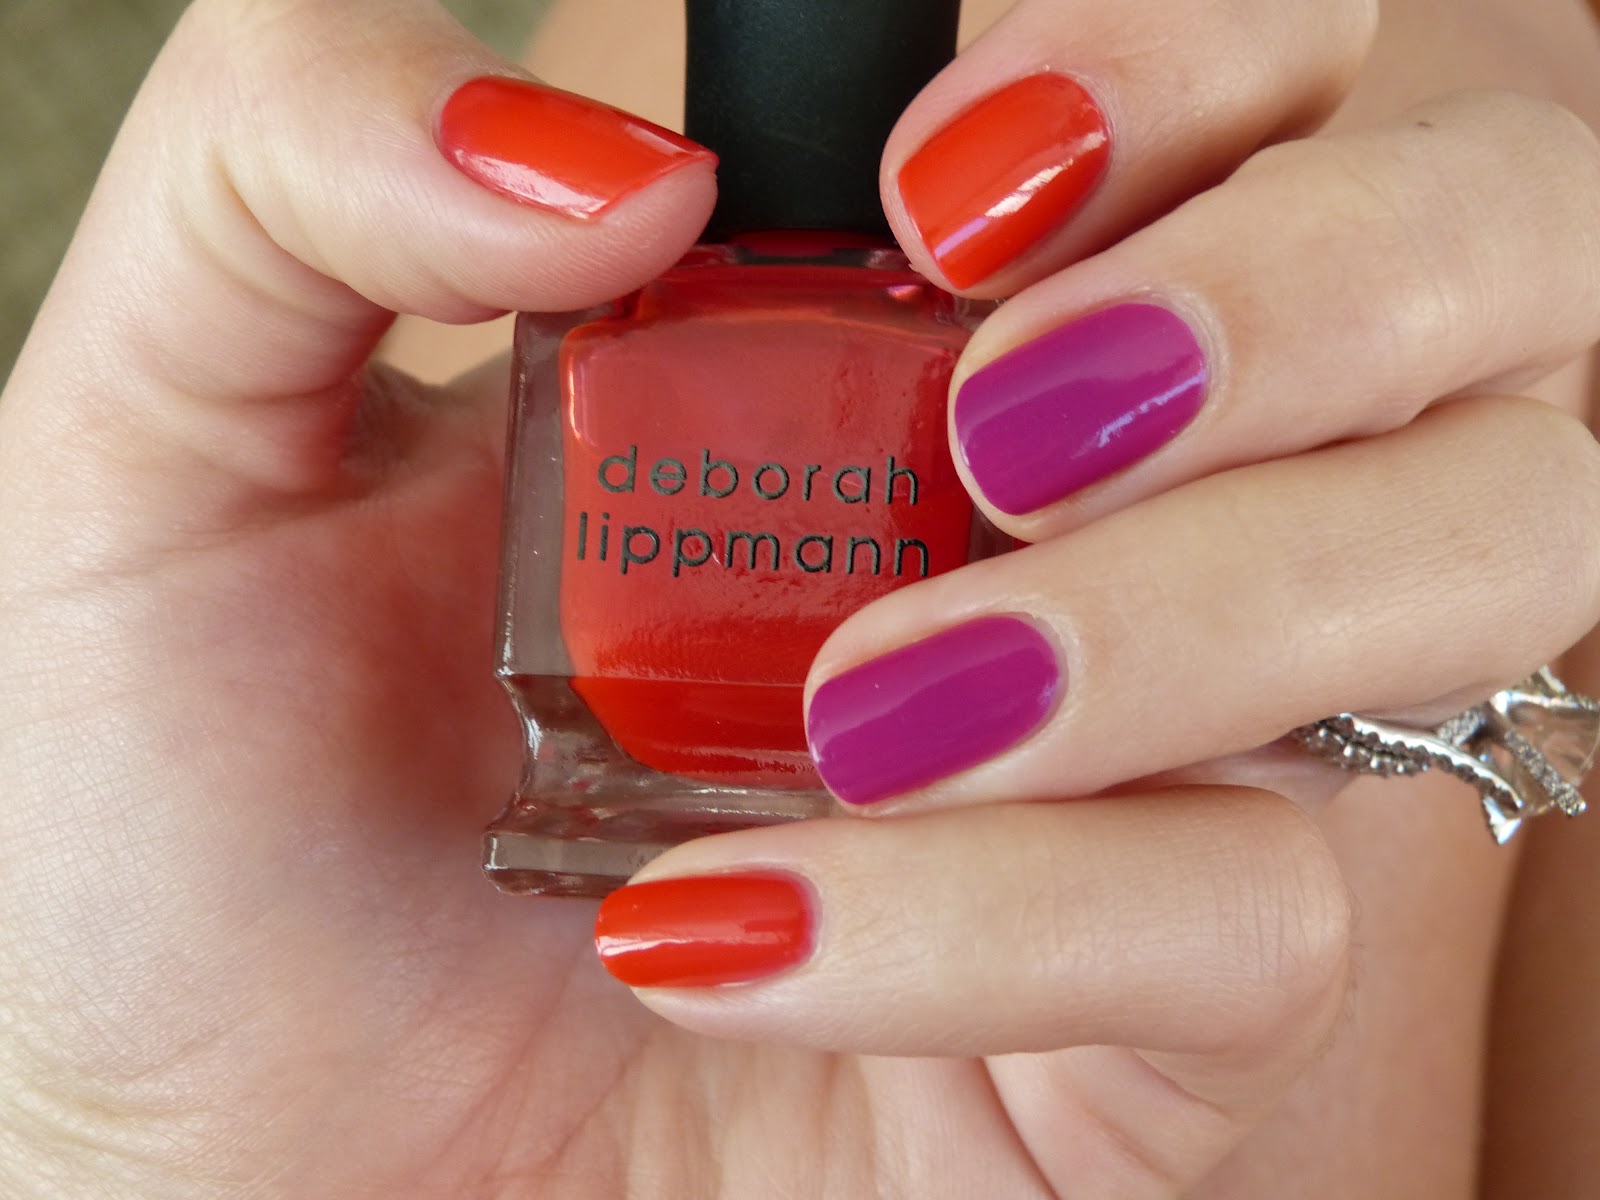 7. "High Roller" nail polish by Deborah Lippmann - wide 4